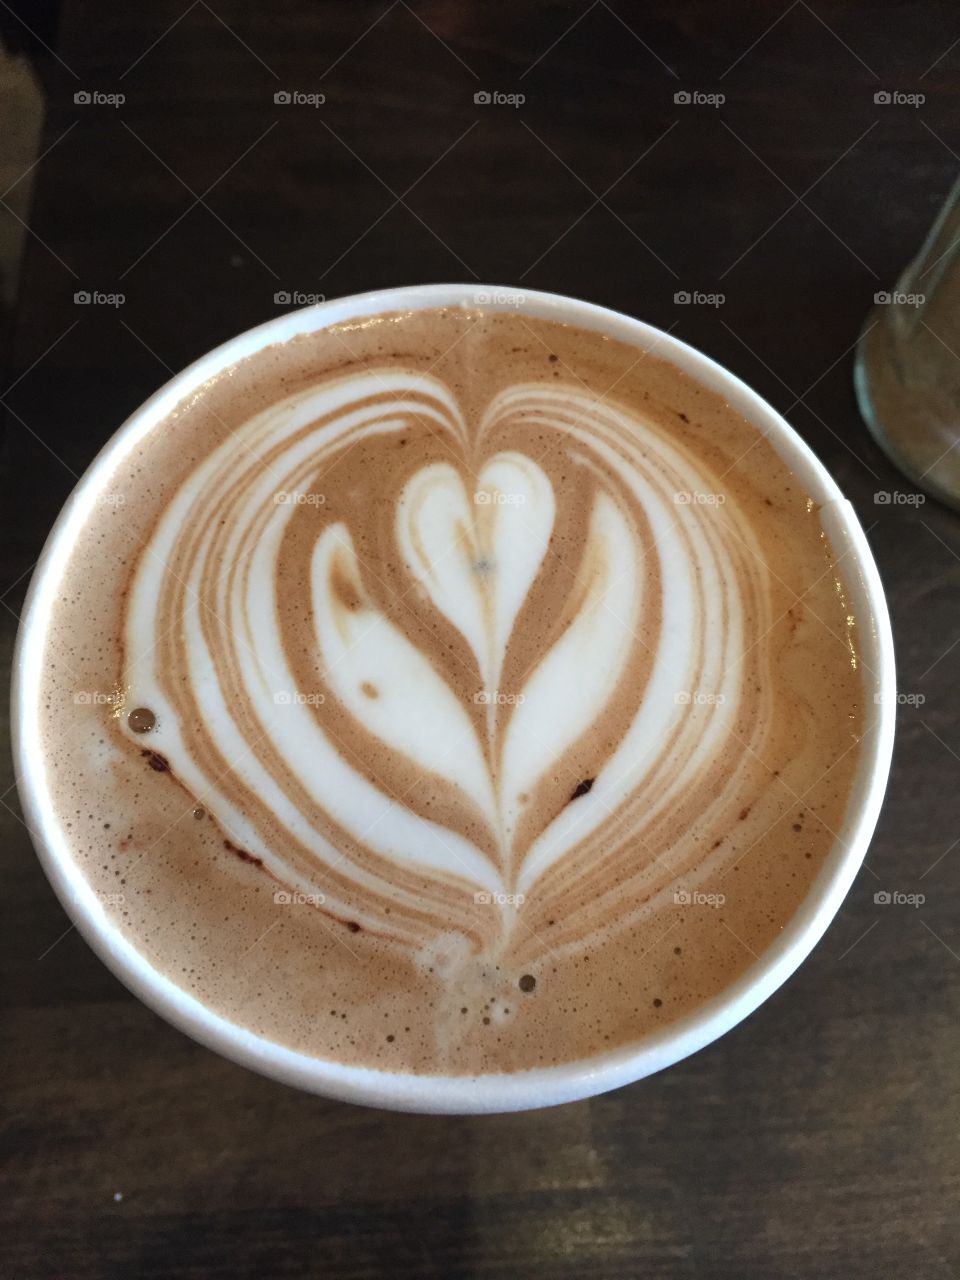 Mocha coffee with a heart swirl